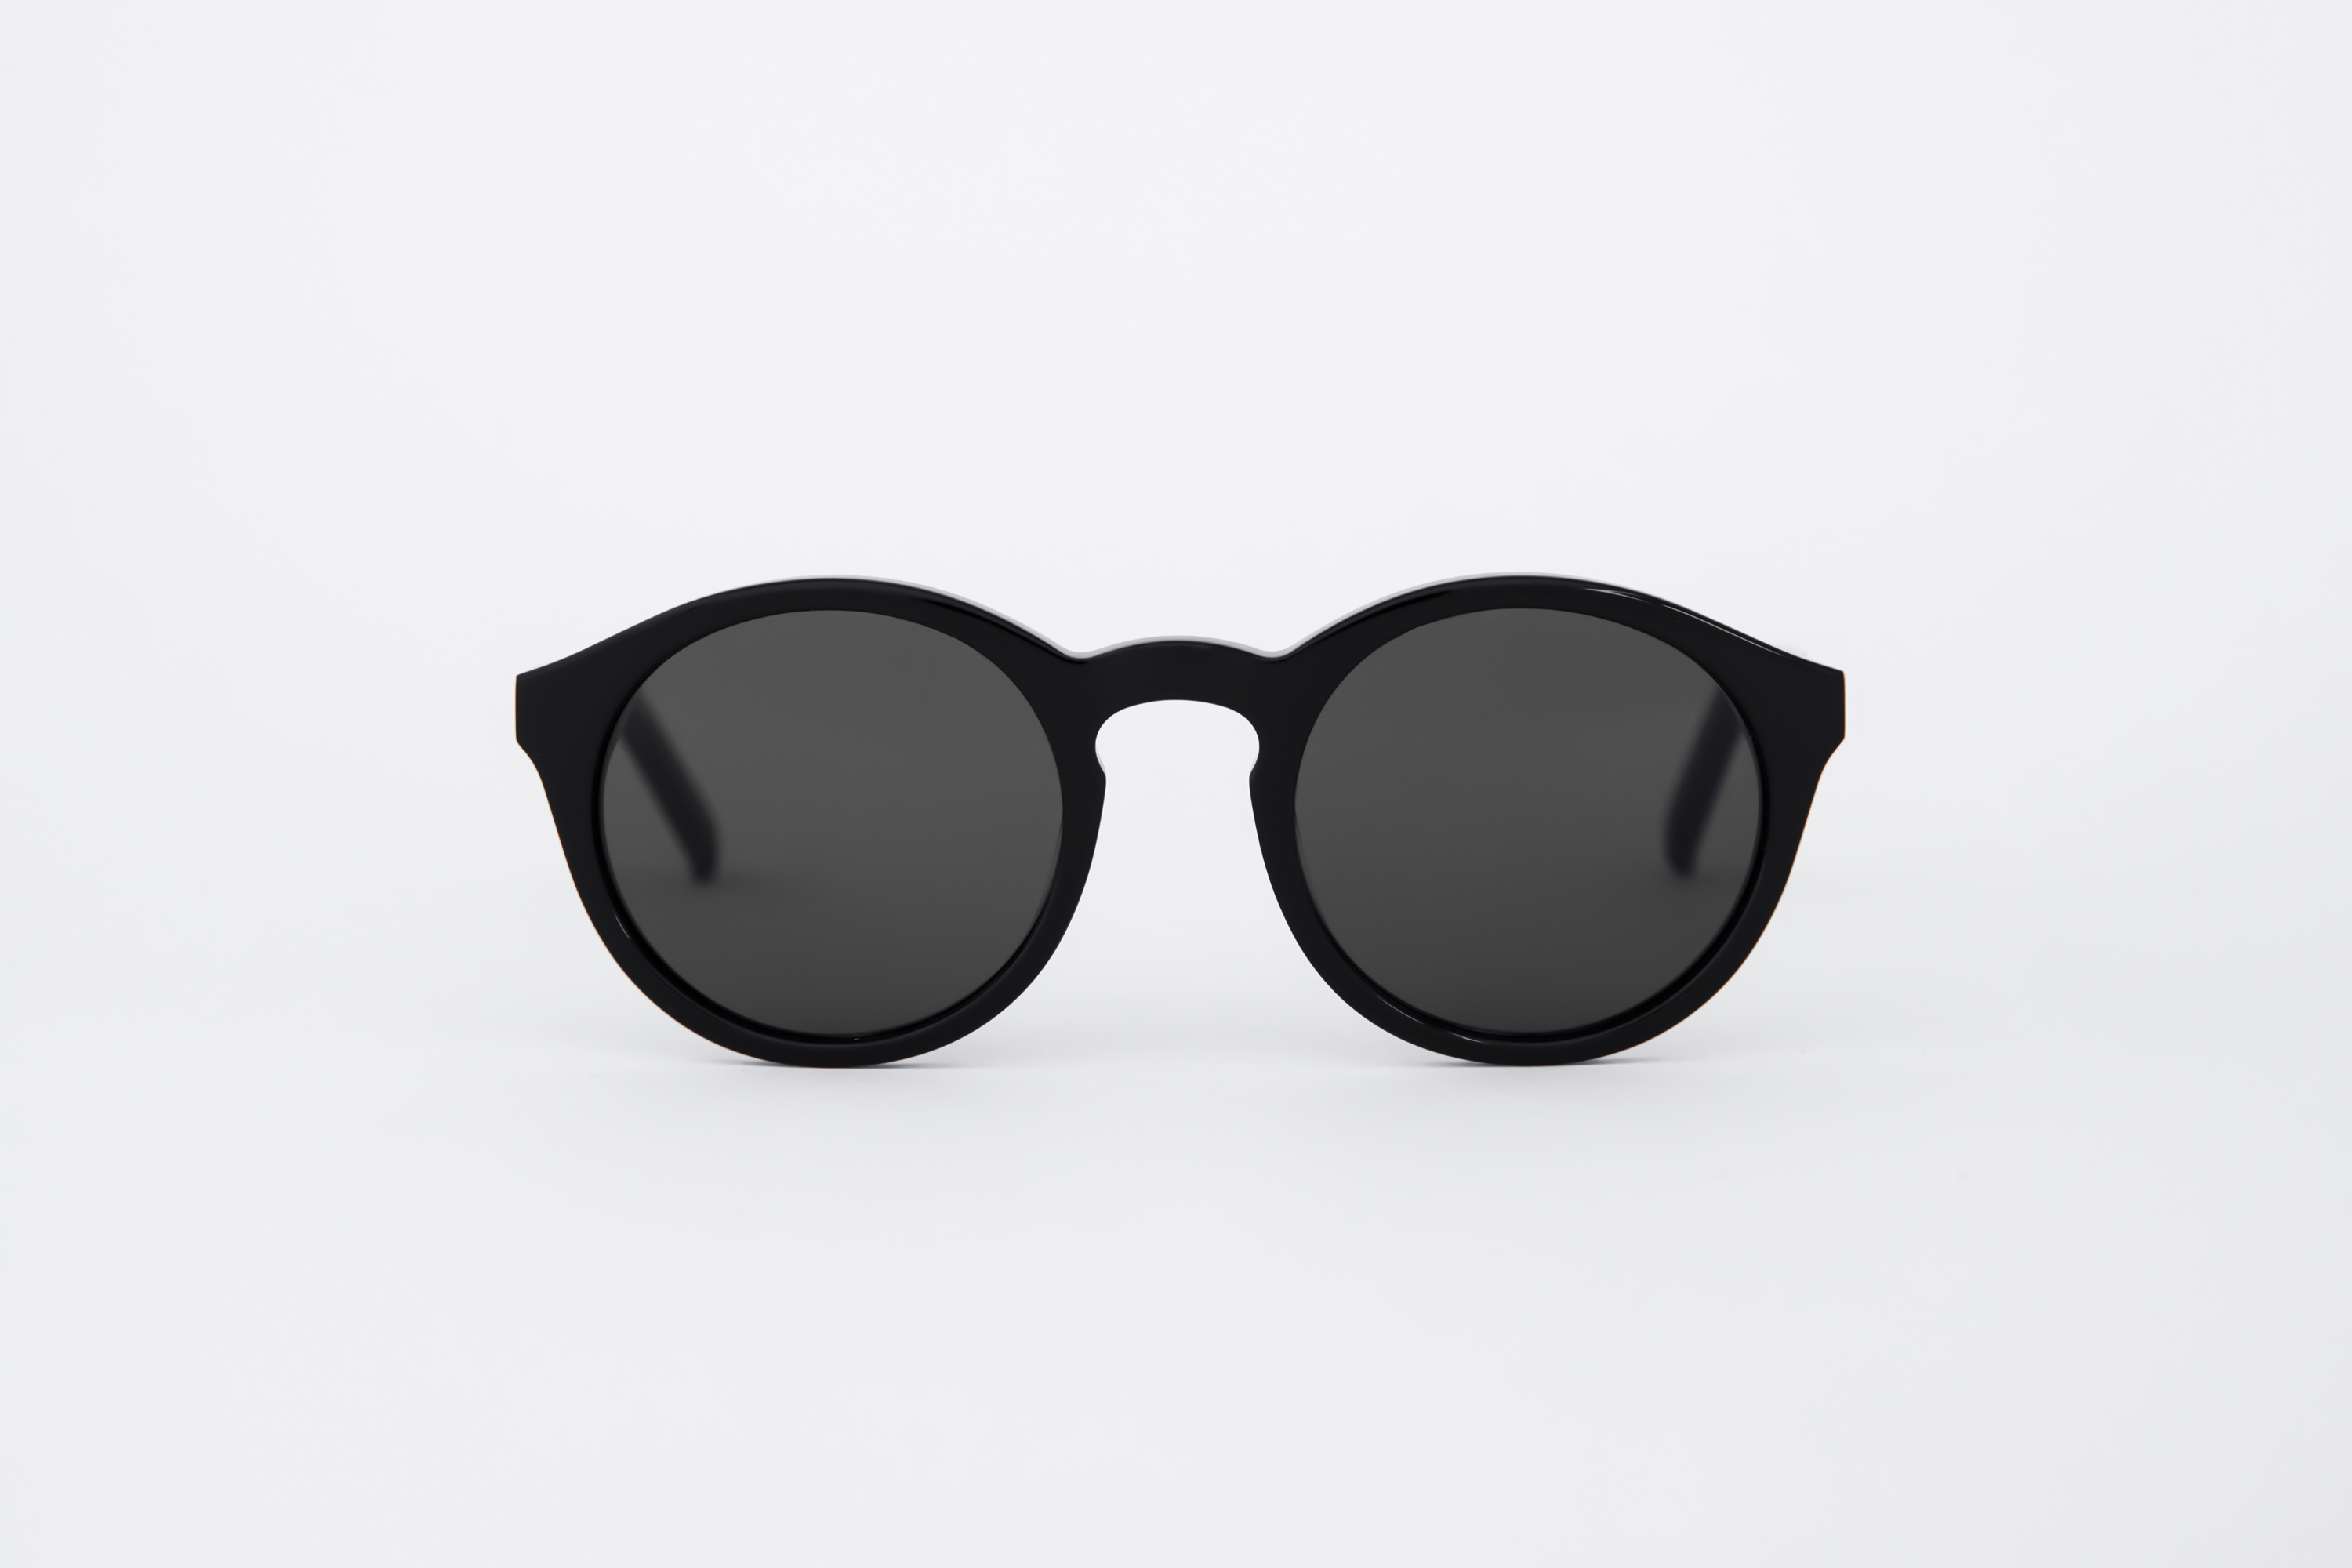 Monokel Eyewear Barstow Black / Grey Solid Lens Sunglasses